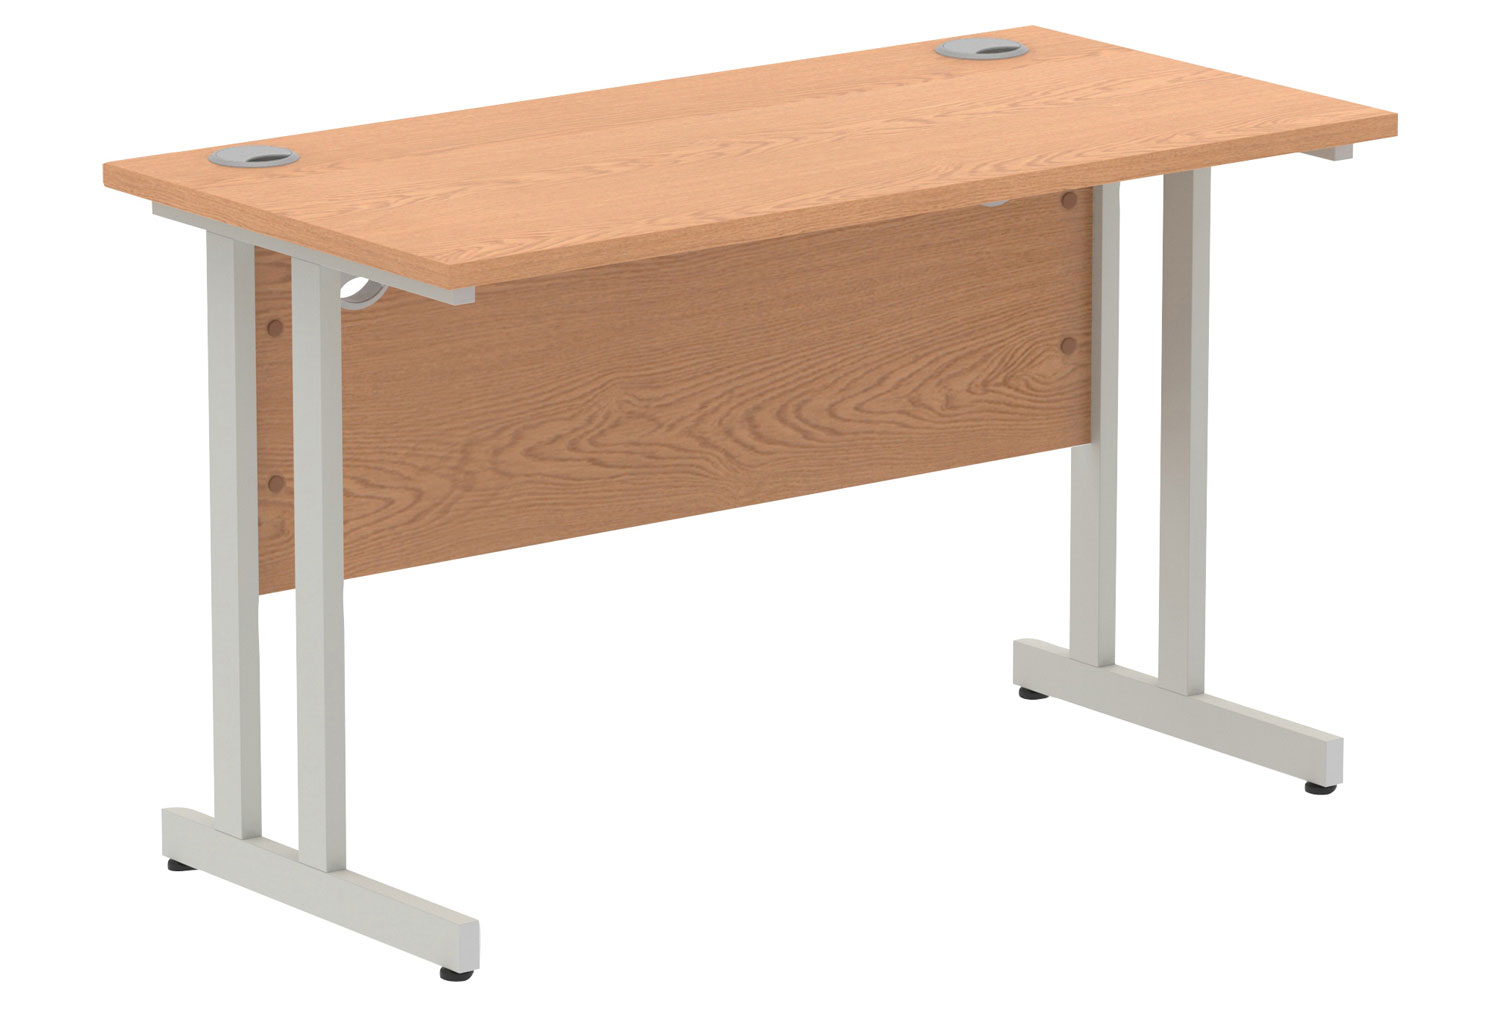 Vitali C-Leg Narrow Rectangular Desk (Silver Legs)